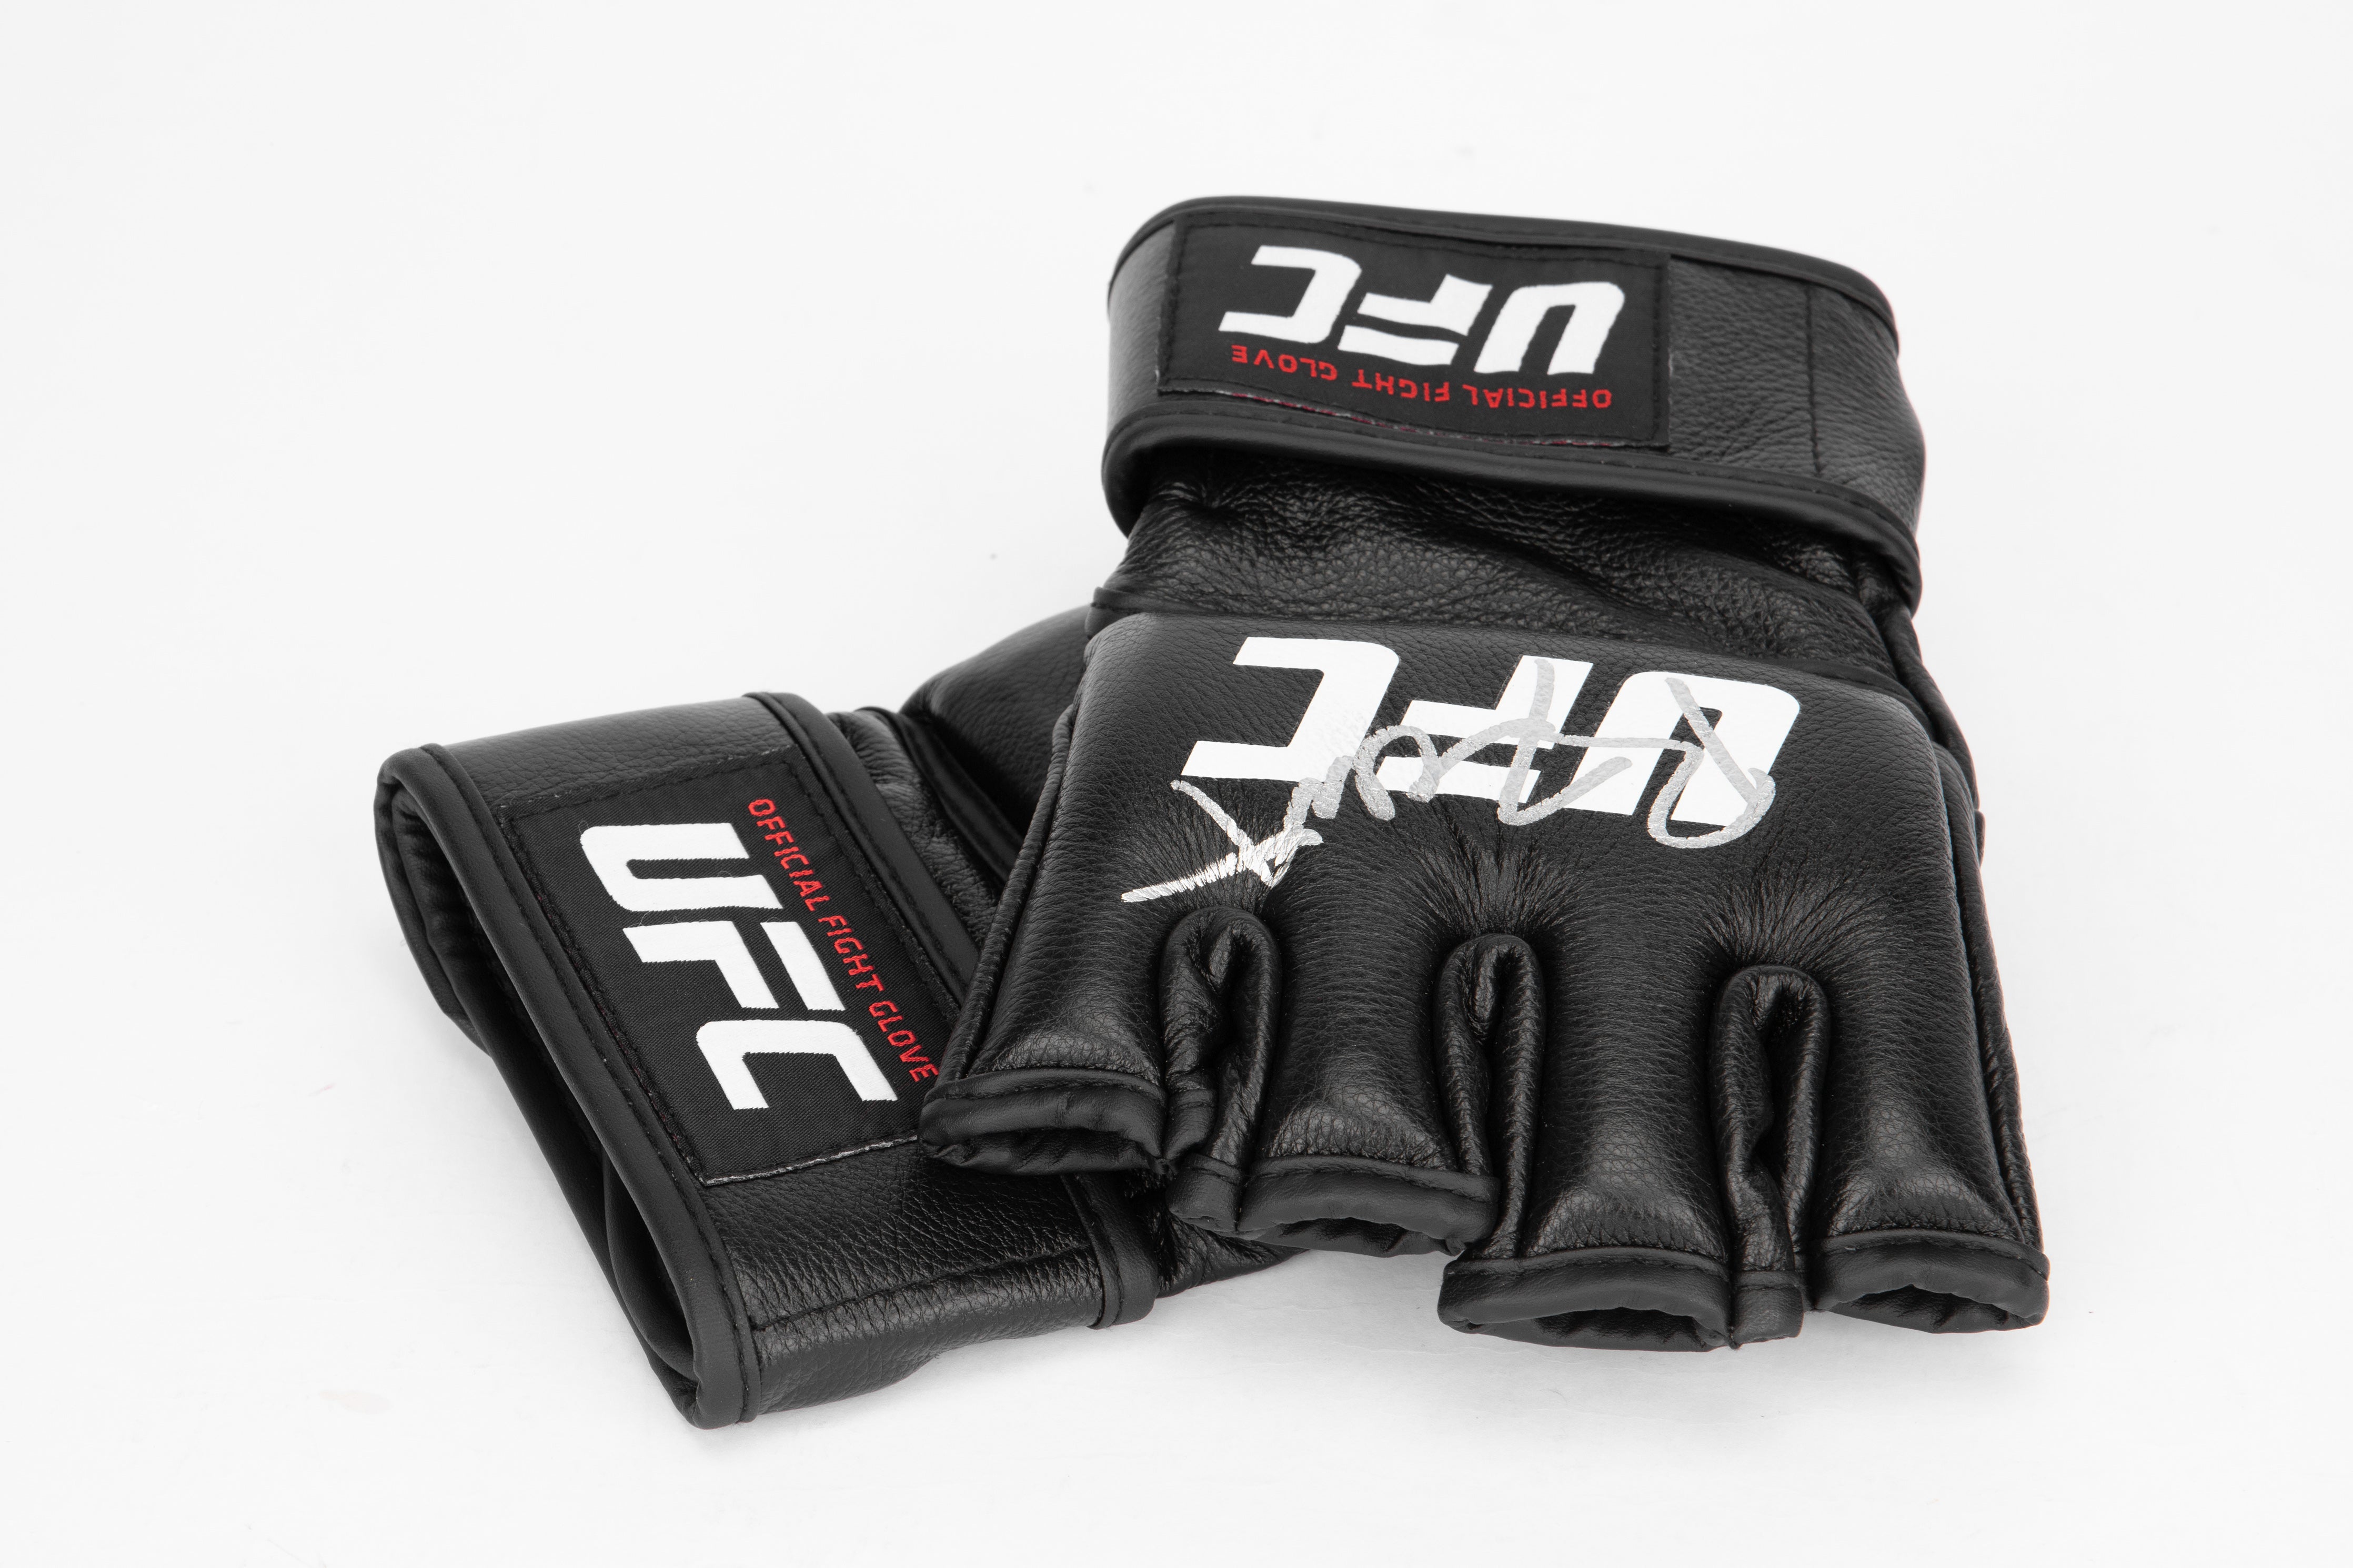 Rob Font Signed Official UFC Gloves